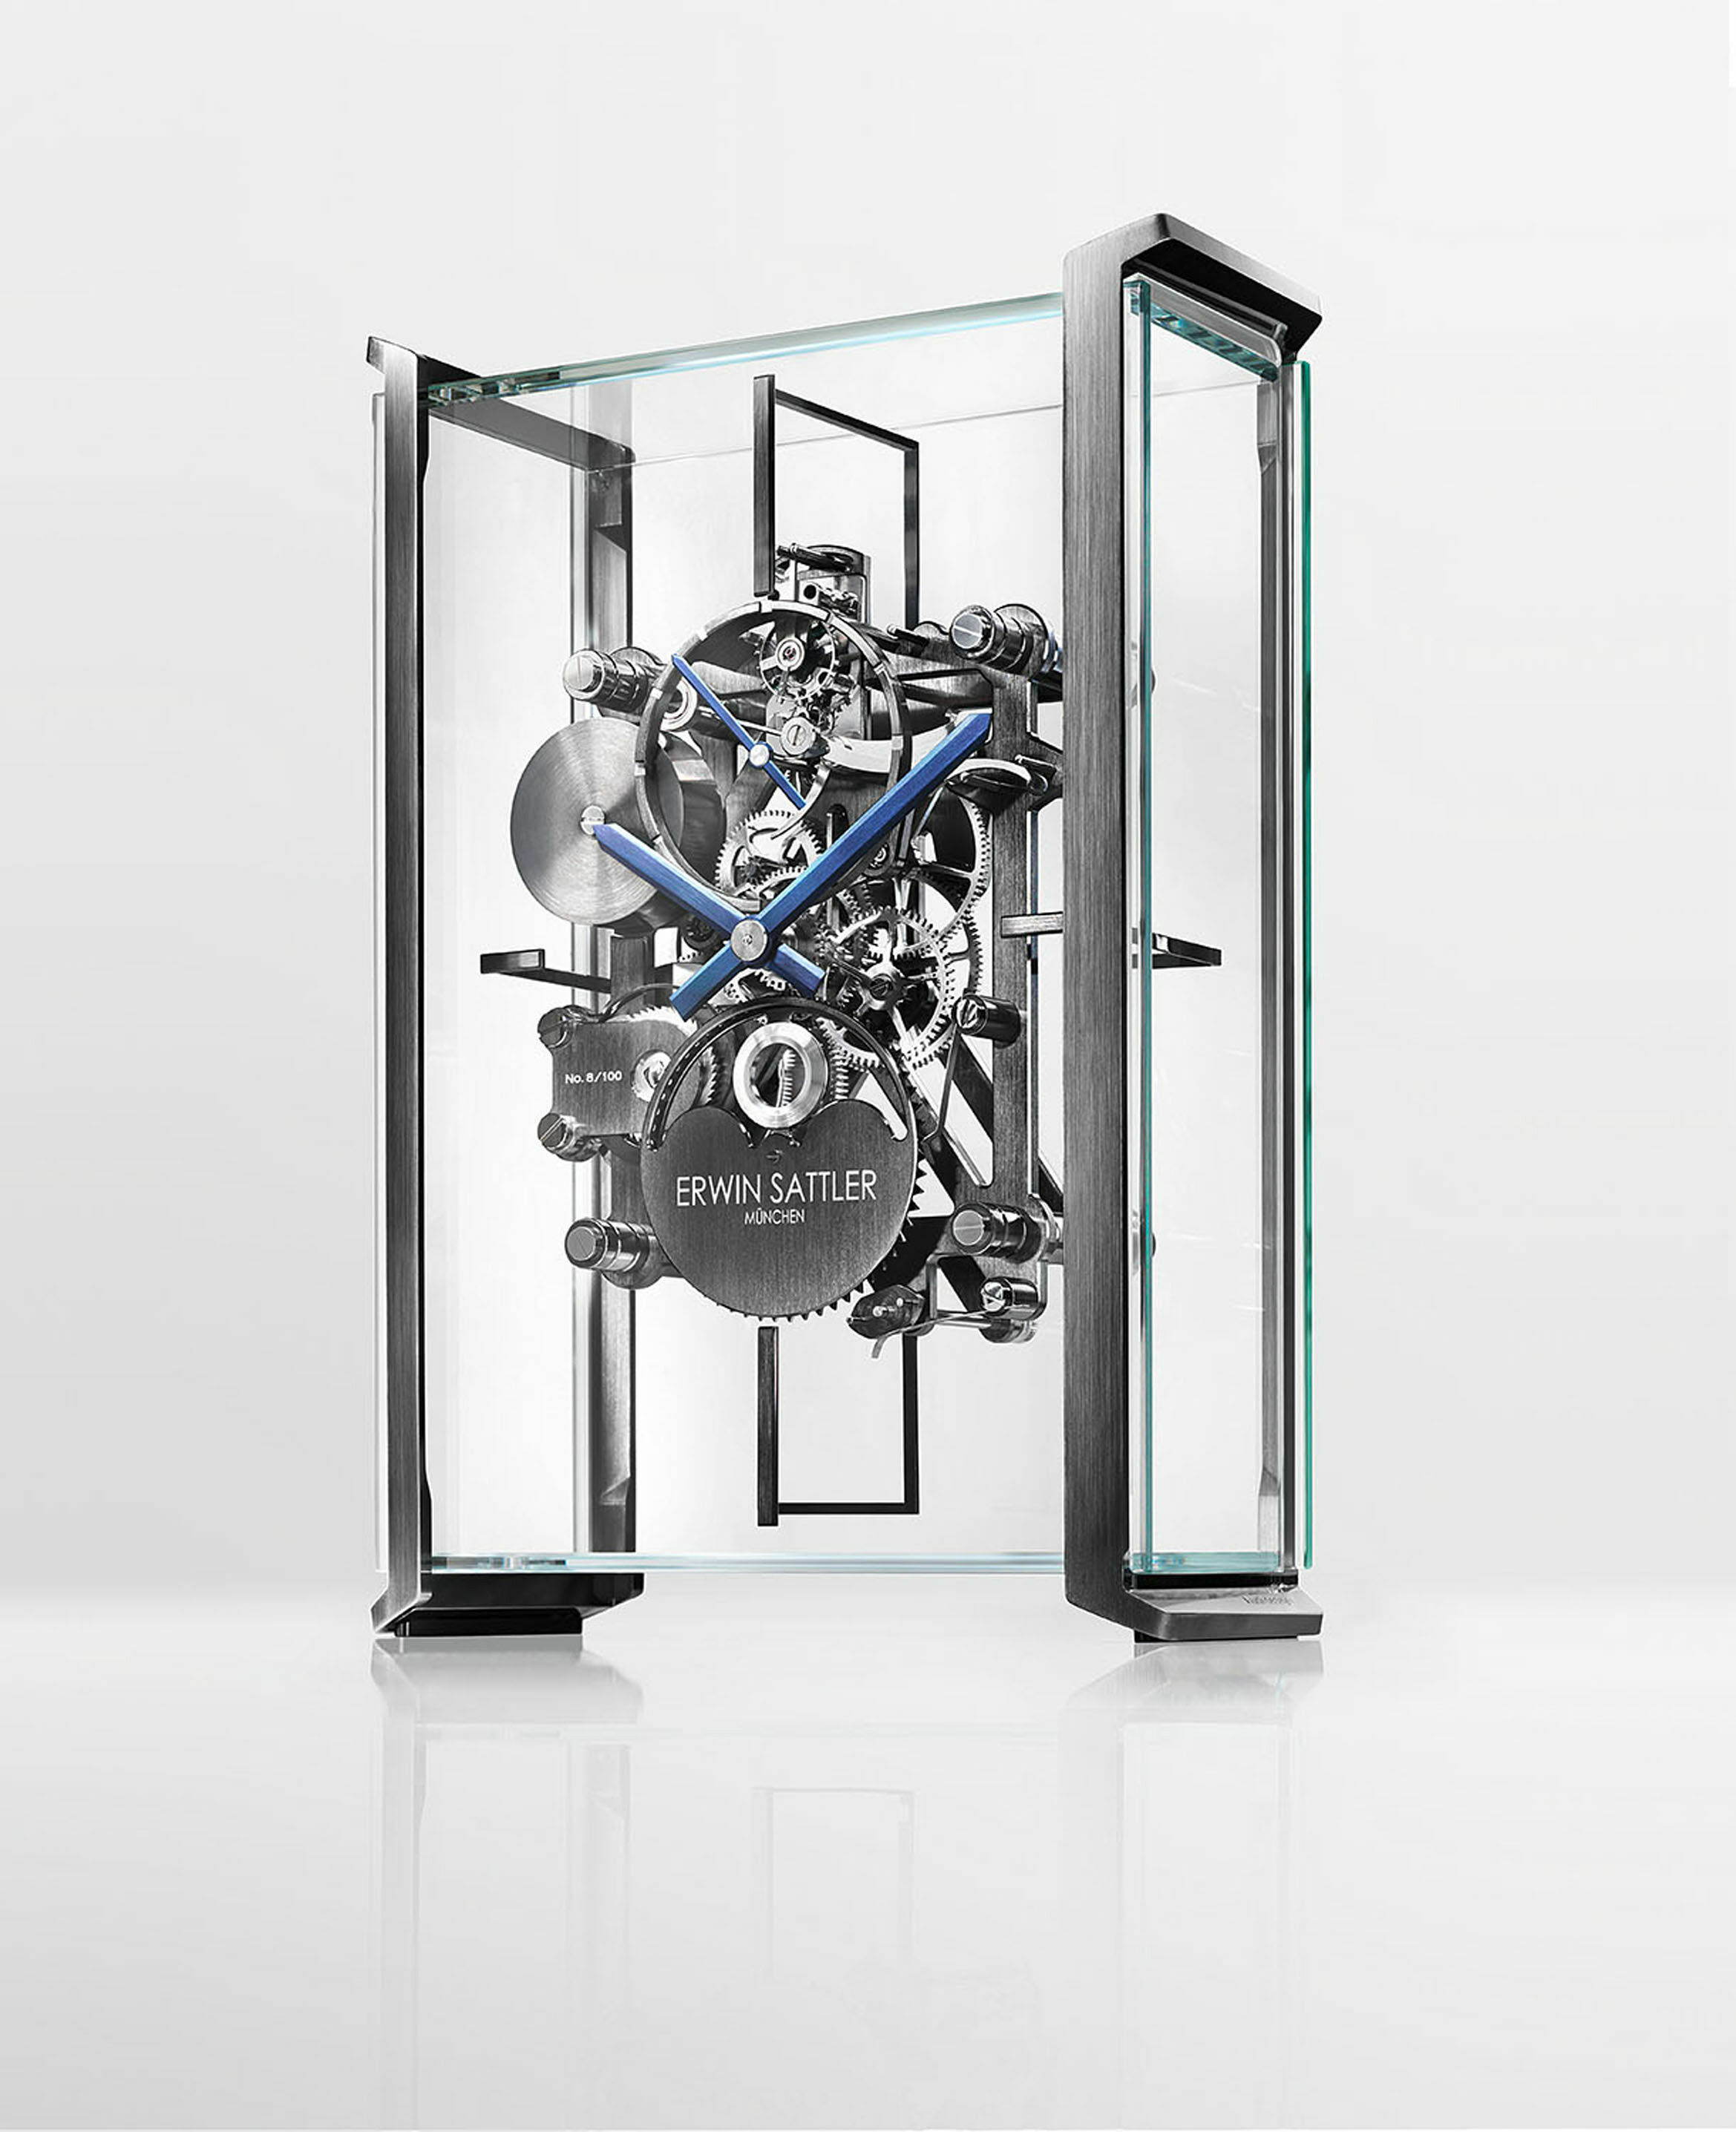 Timeless technology: the Erwin Sattler table clock by Audi design